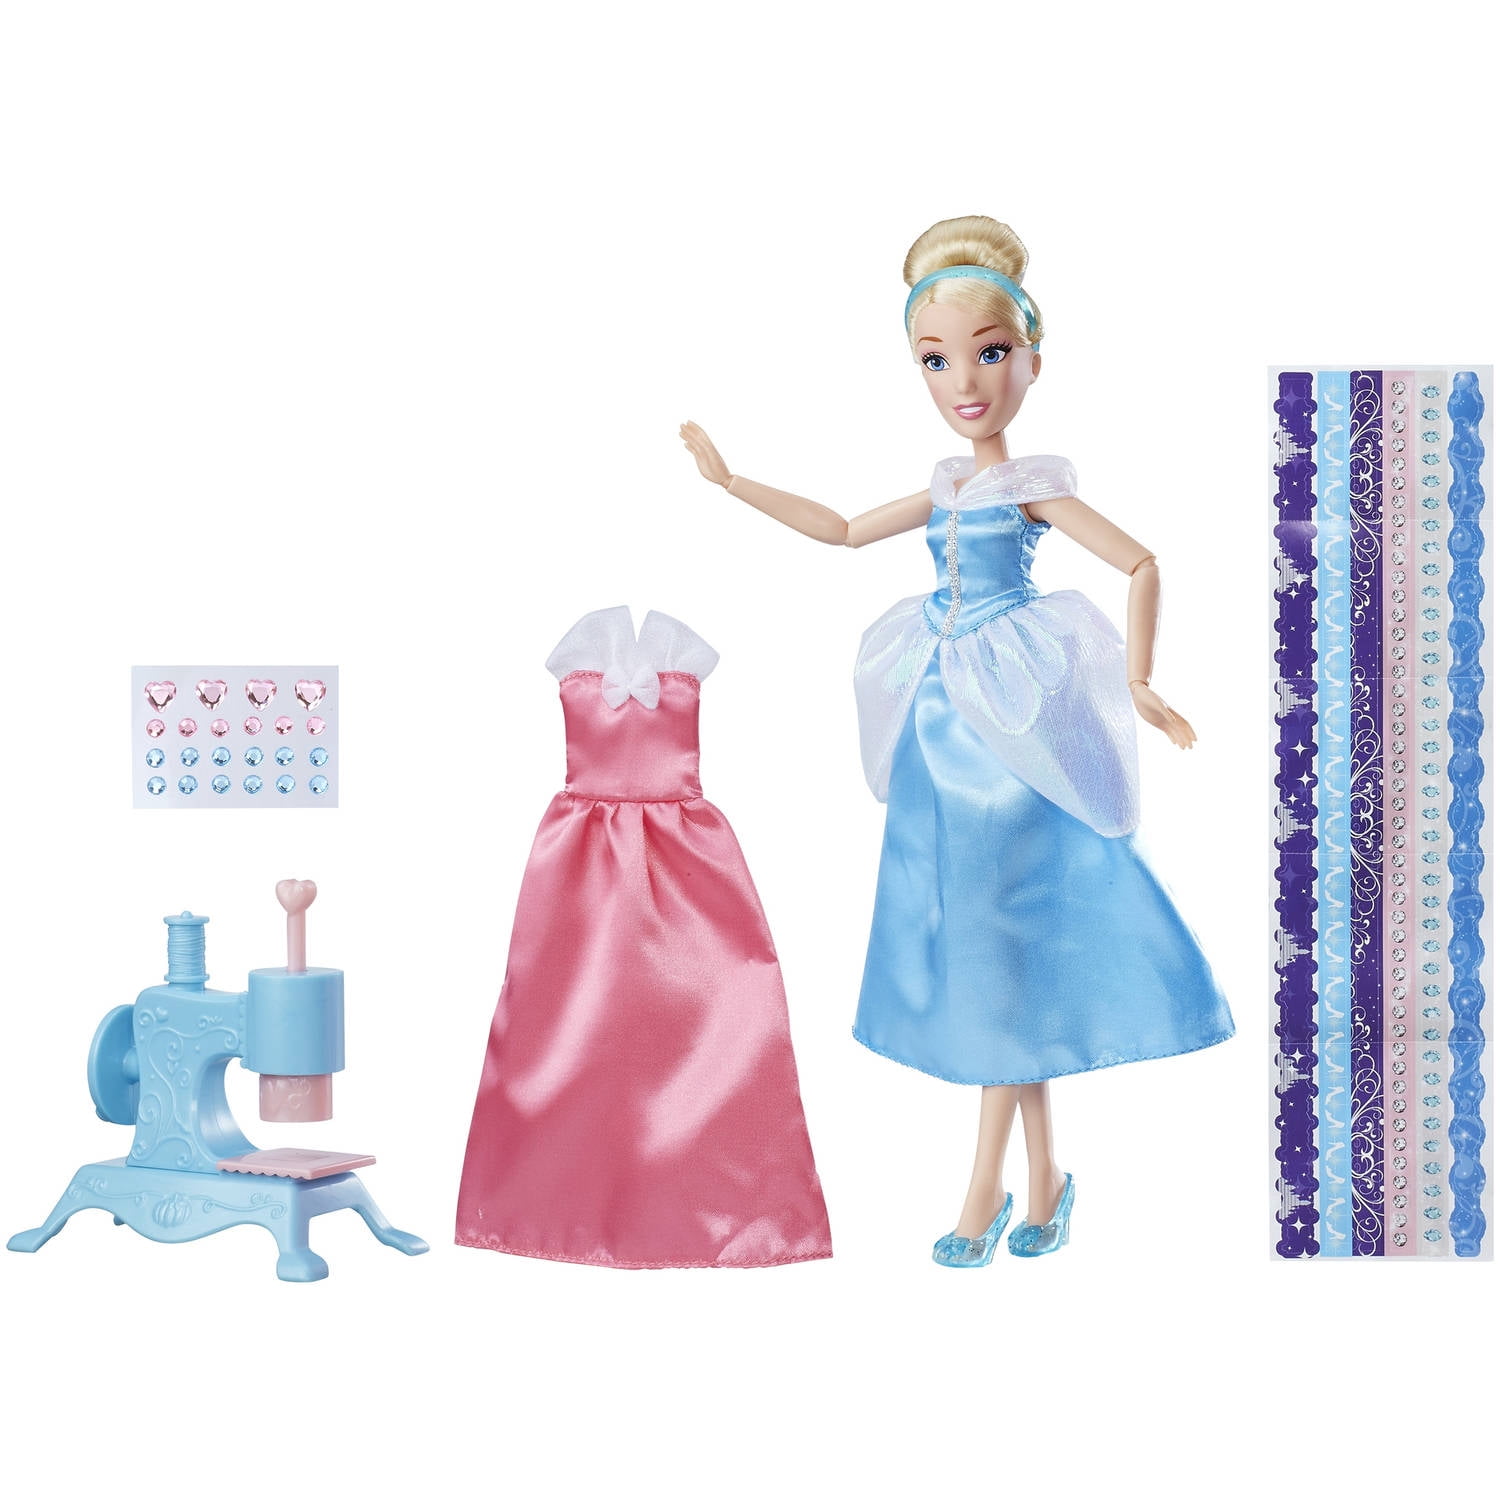 Barbie Spin Art Designer with Barbie Doll - Walmart.com